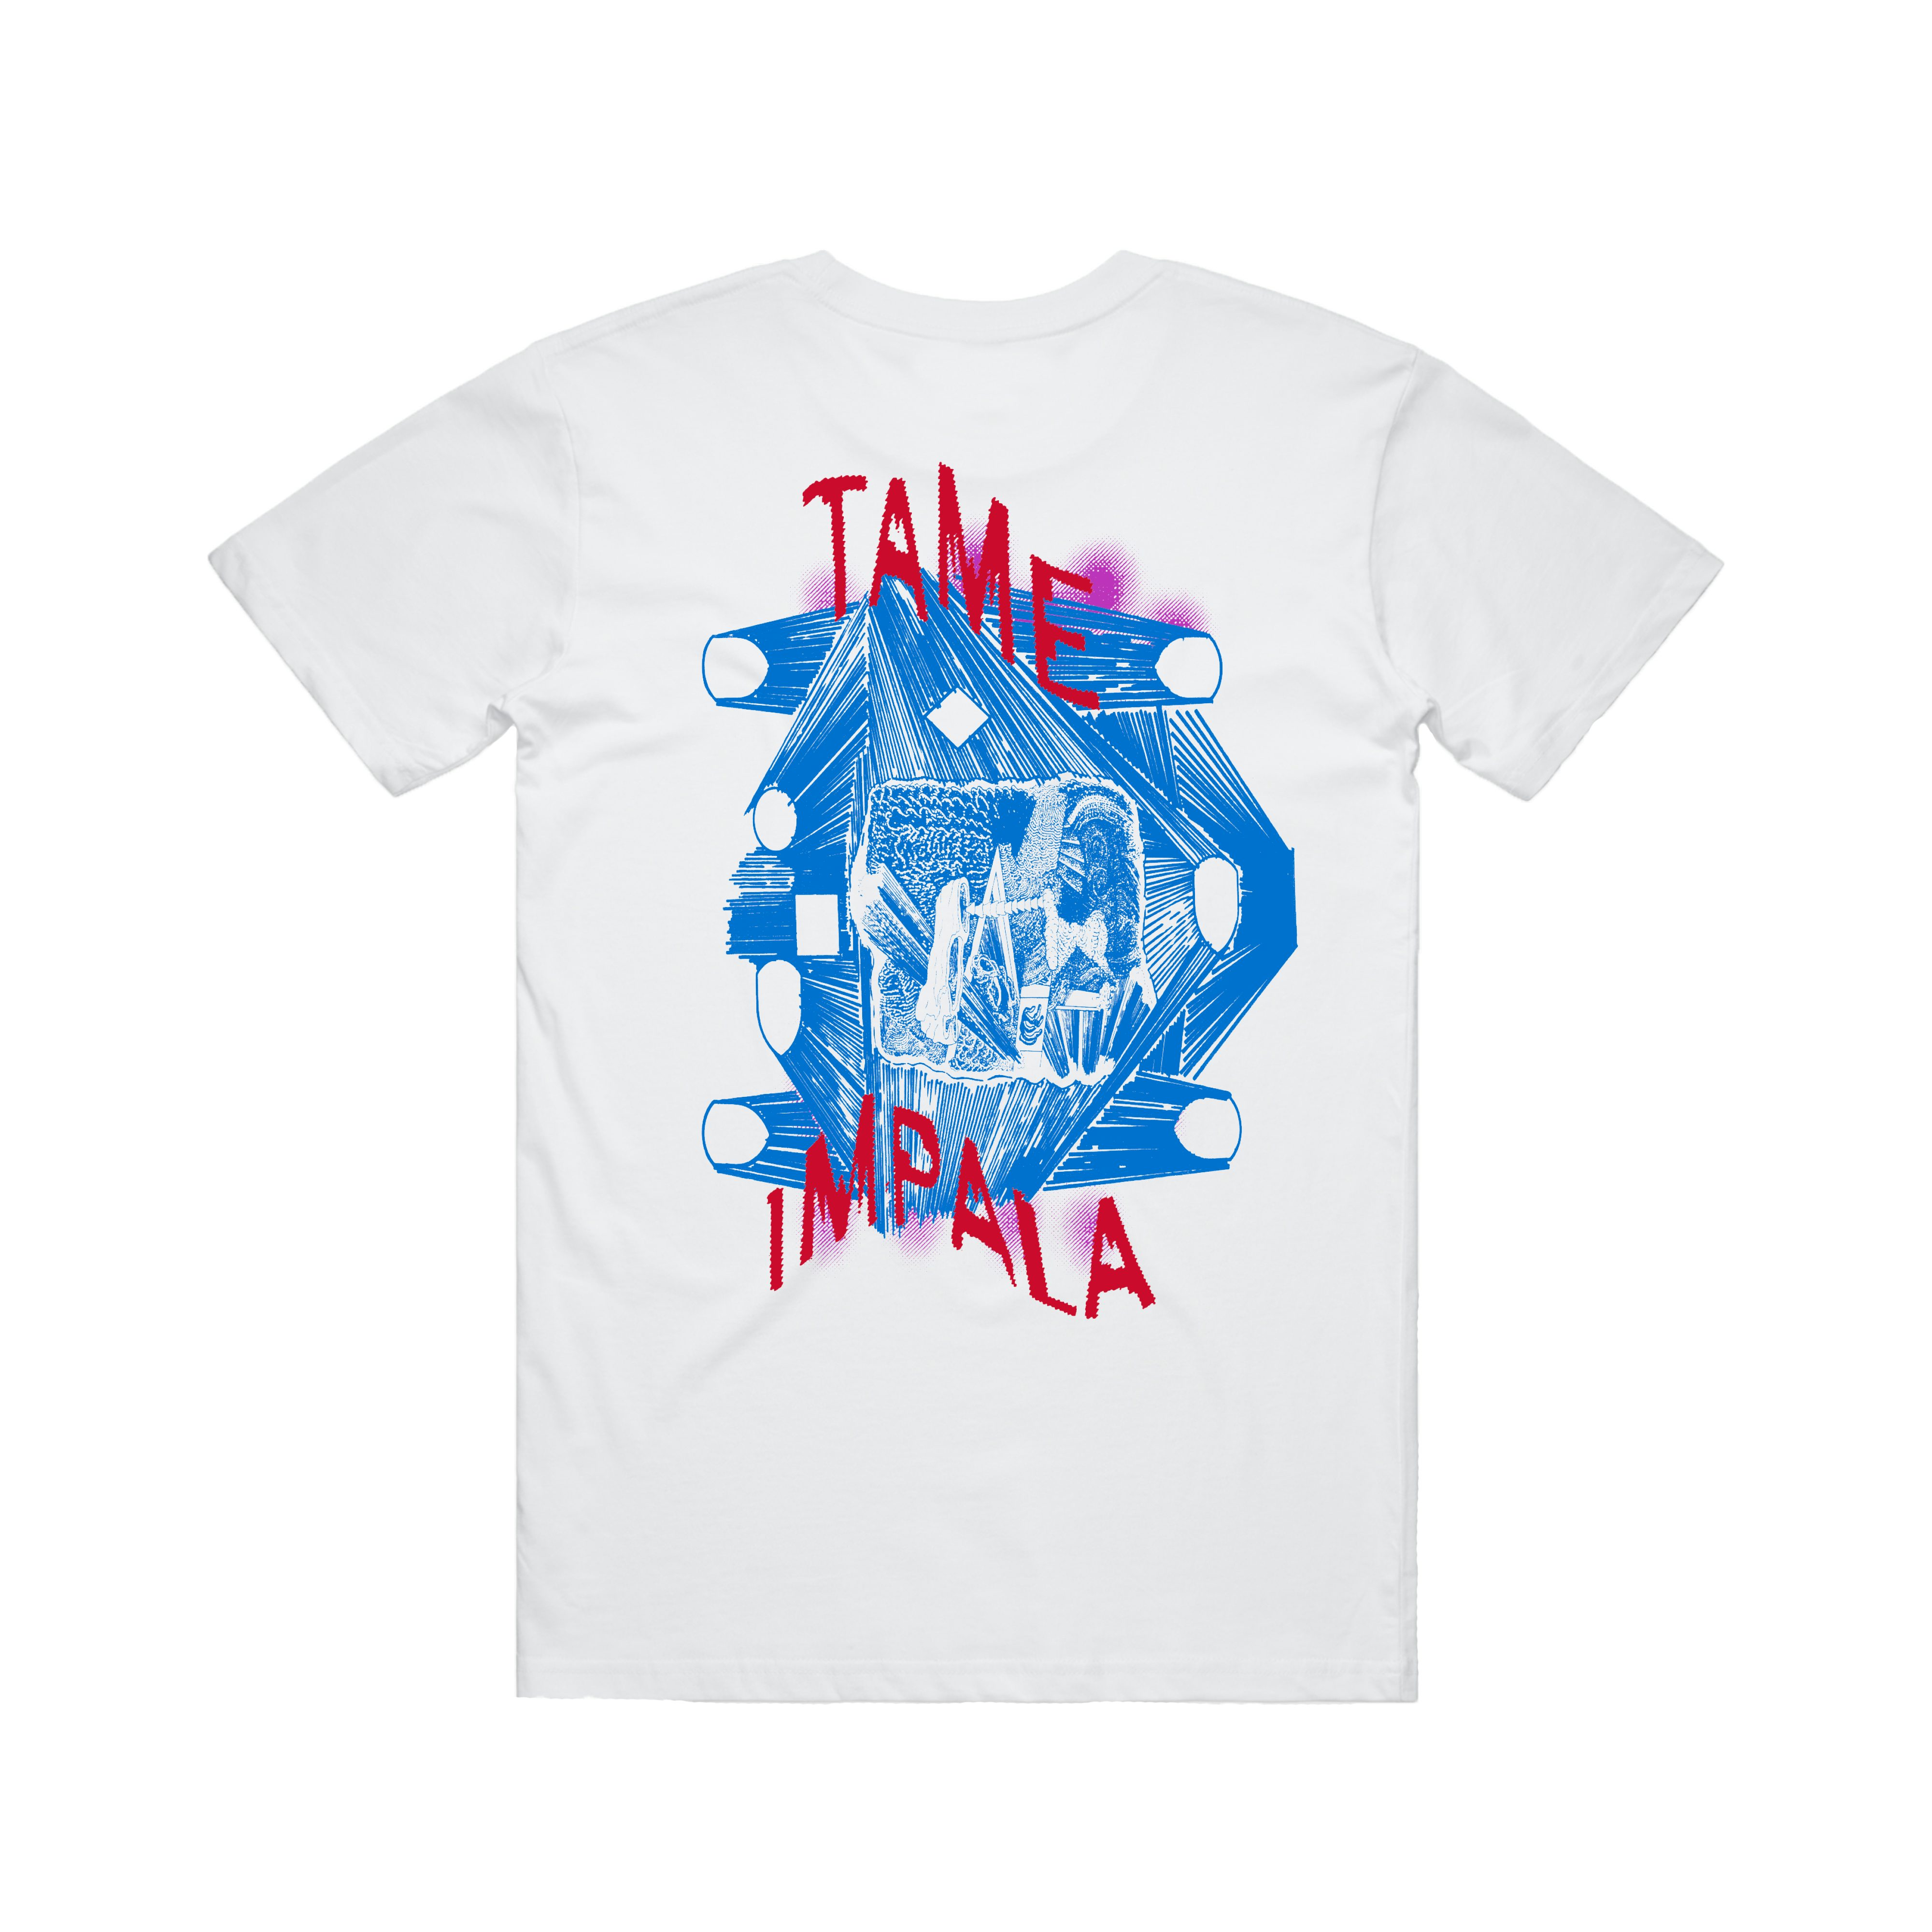 tame impala tour shirt